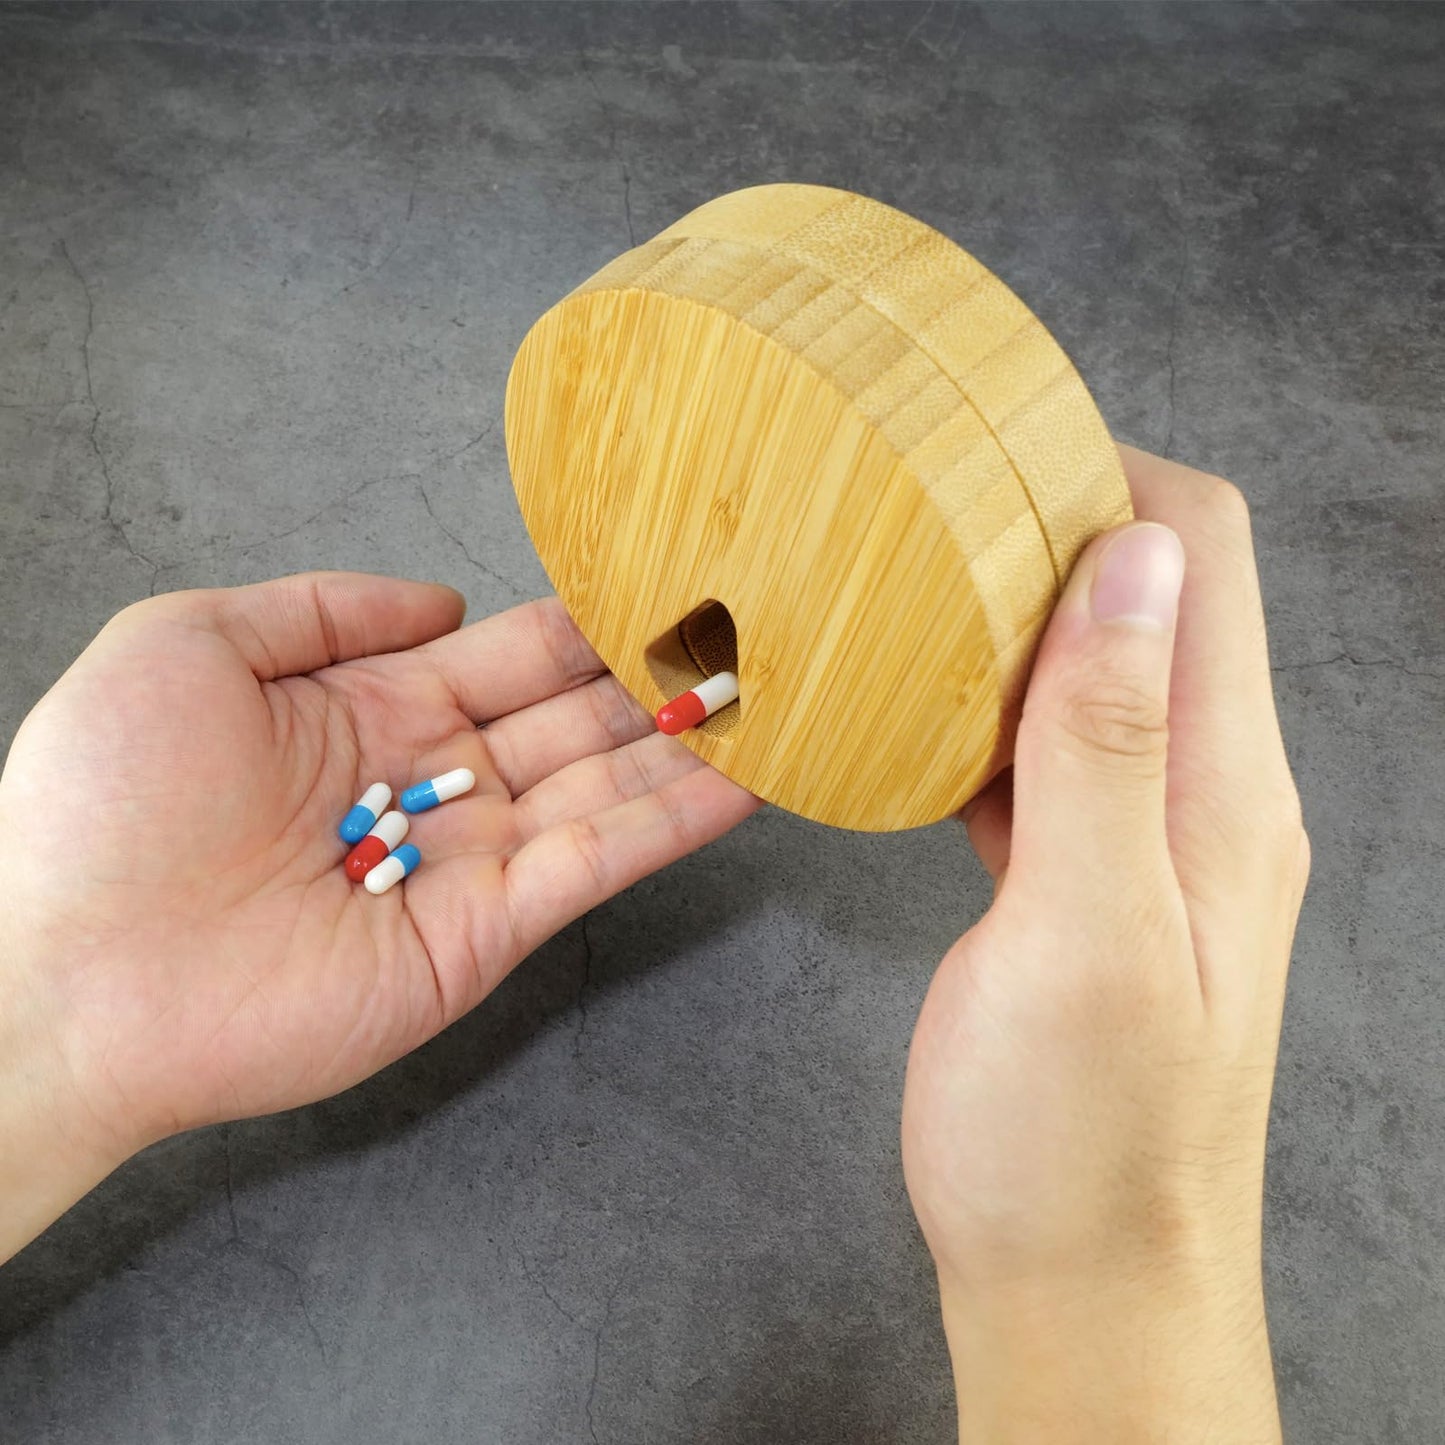 CHIEMONT: Wooden Pill/Supplement Organizer